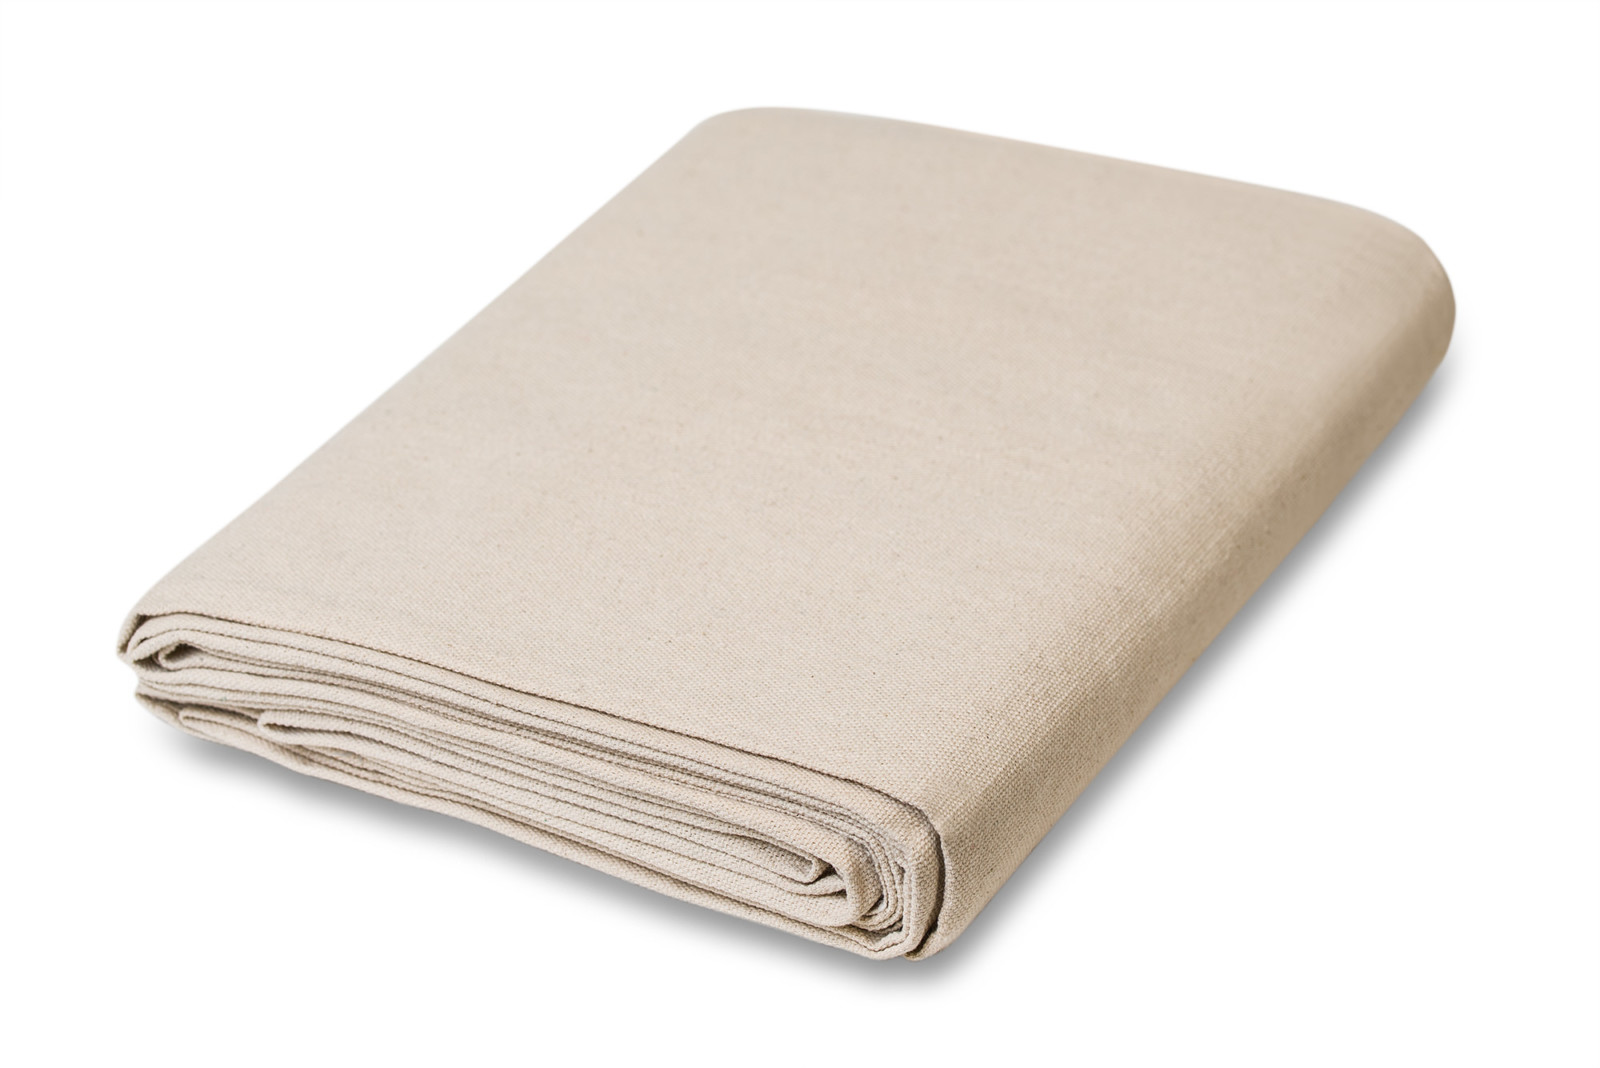 Cotton Canvas Fabric, #8/60 18oz Duck Cloth